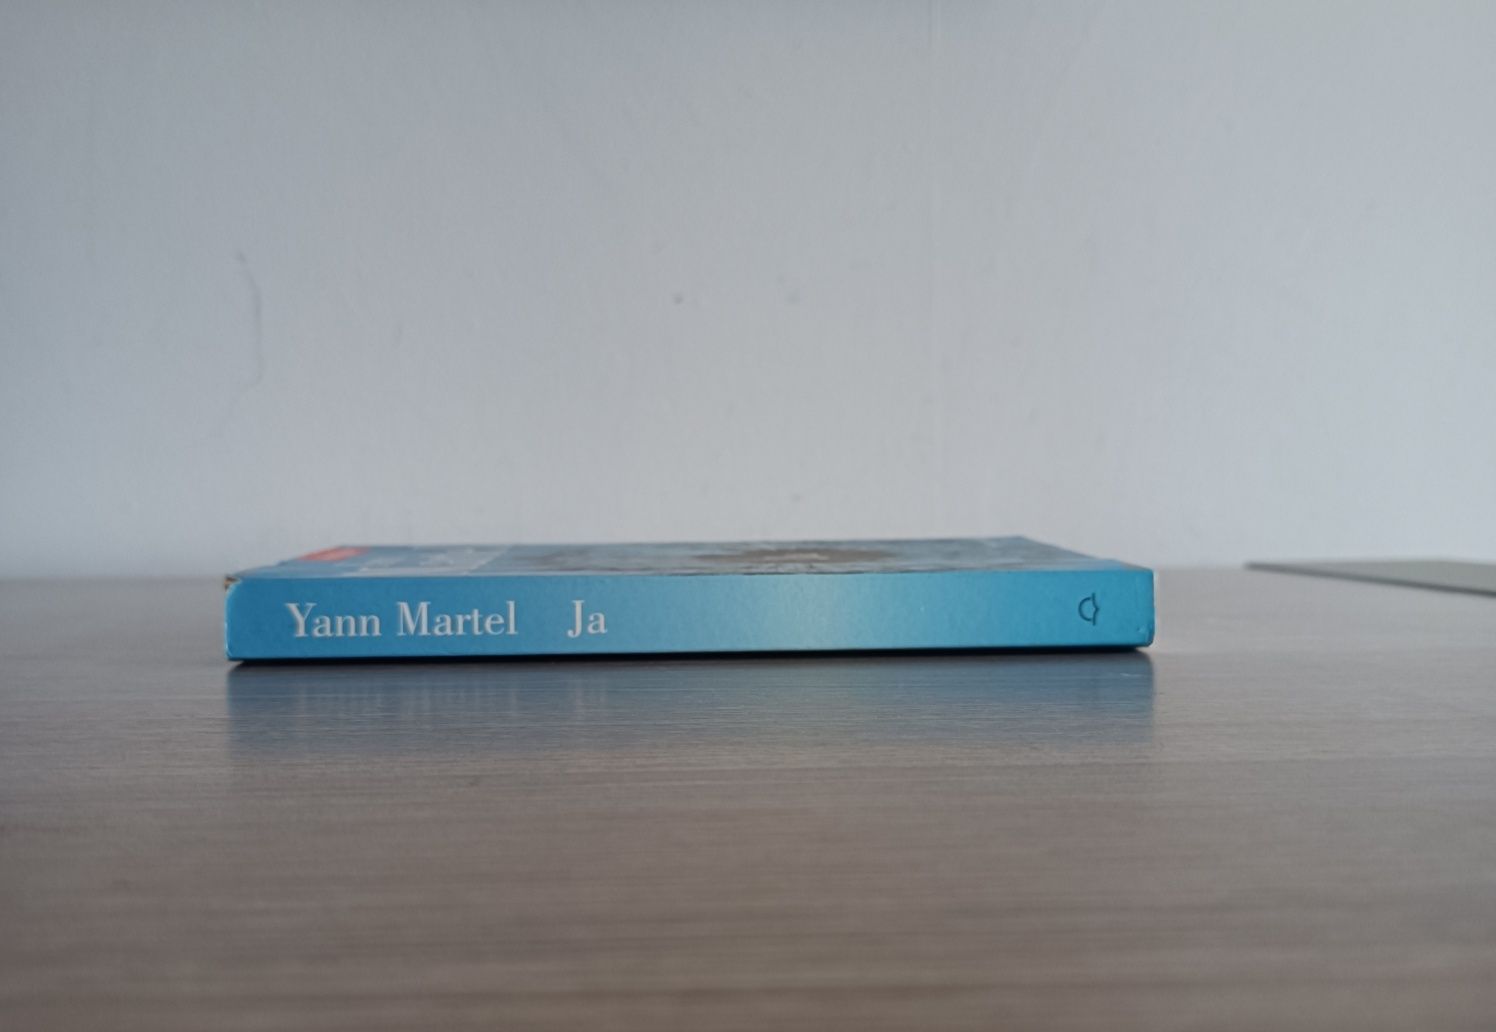 Yann Martel "Ja"